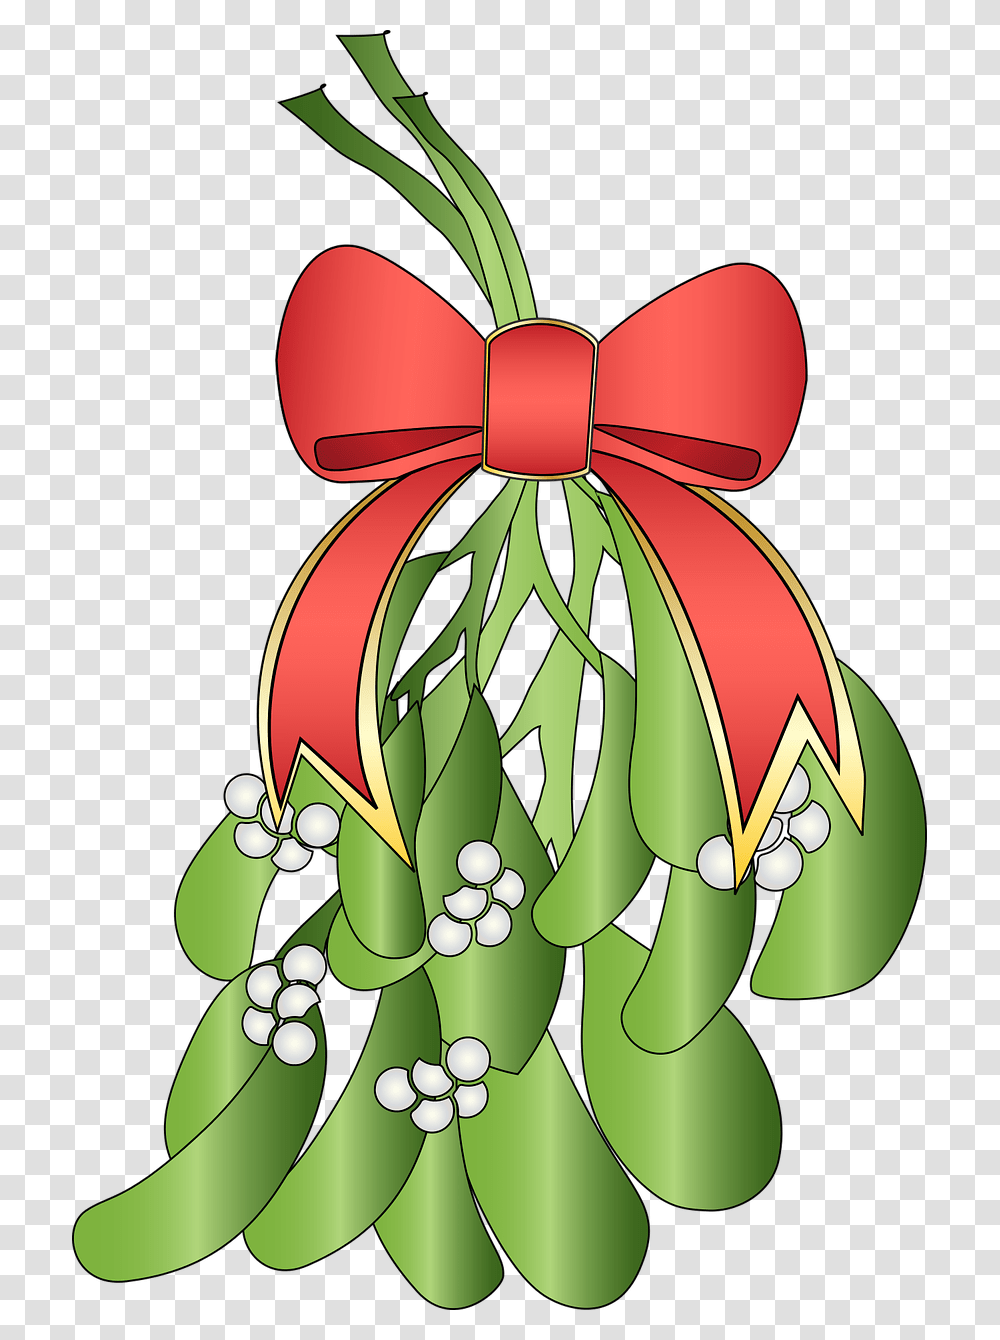 Gift Christmas Light Bulb Turkey Ornament Poinsettia Illustration, Plant Transparent Png